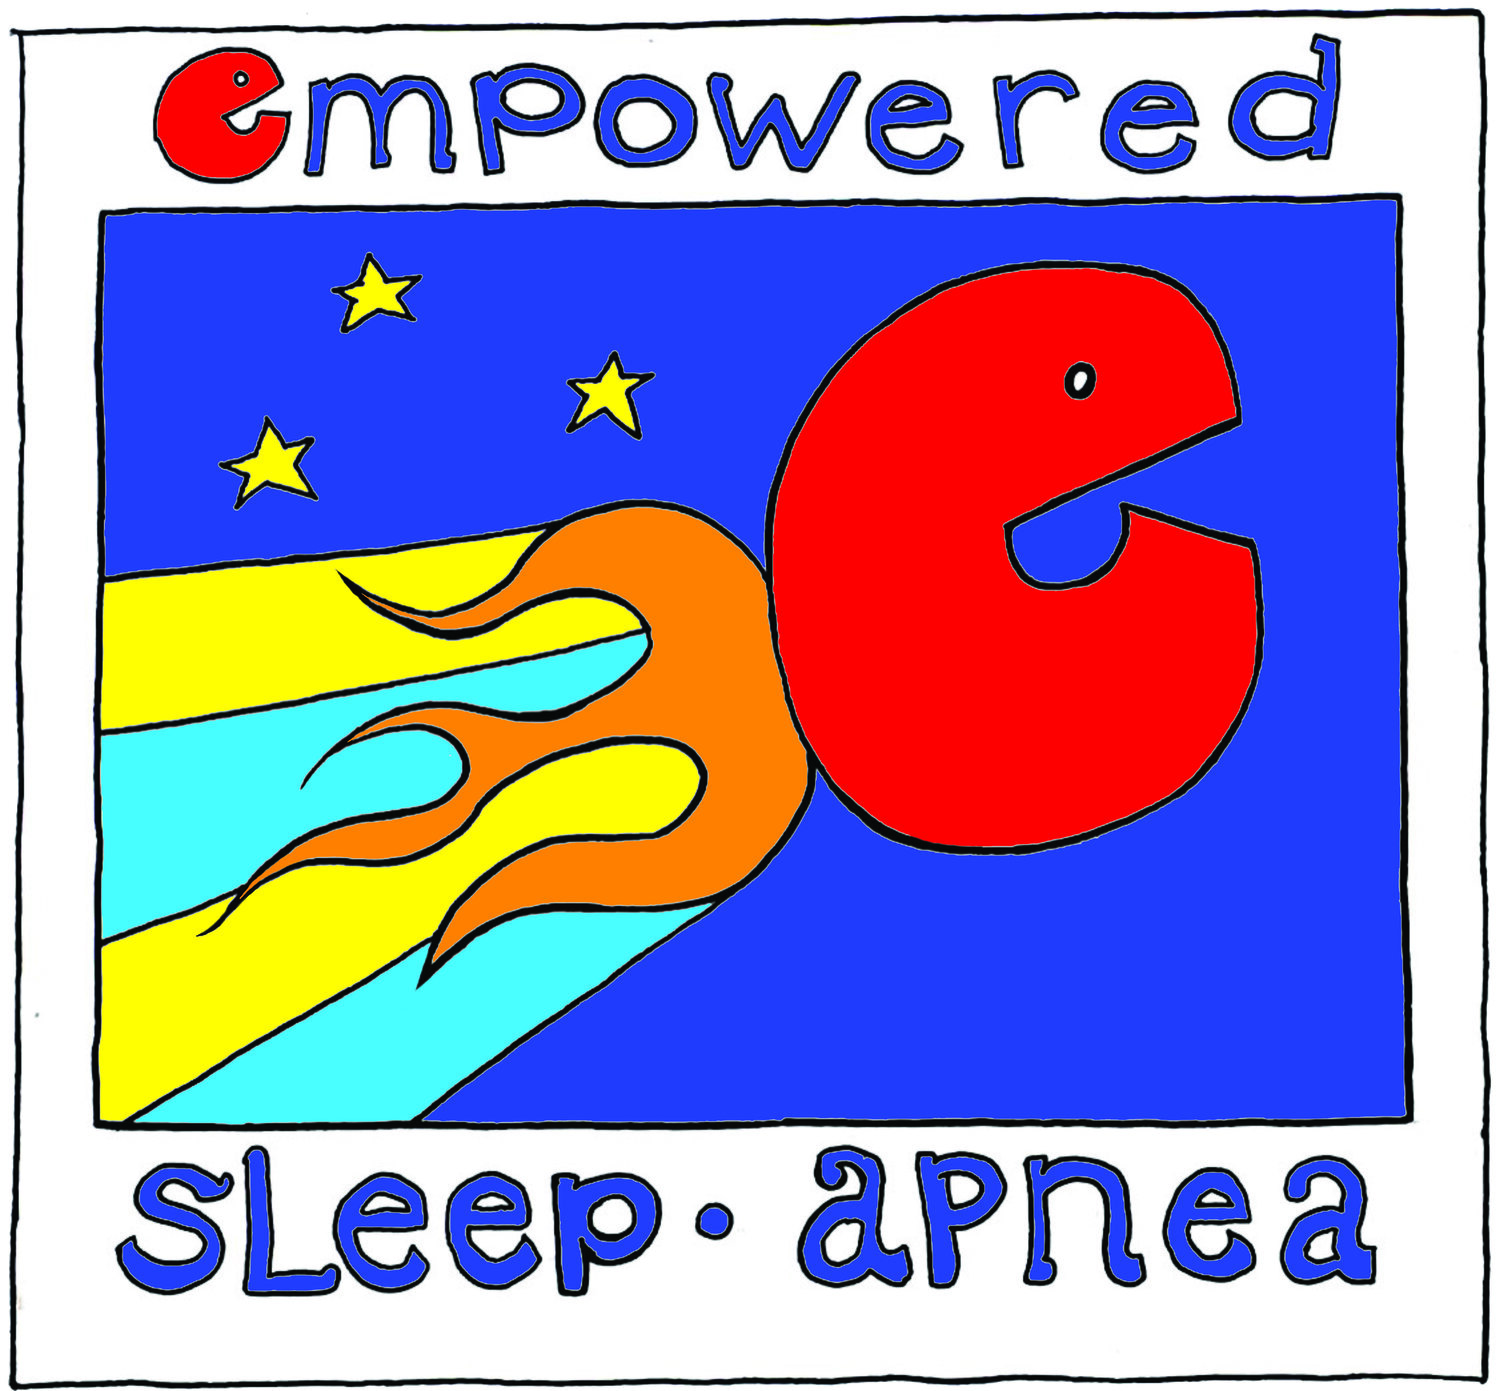 Empowered Sleep Apnea